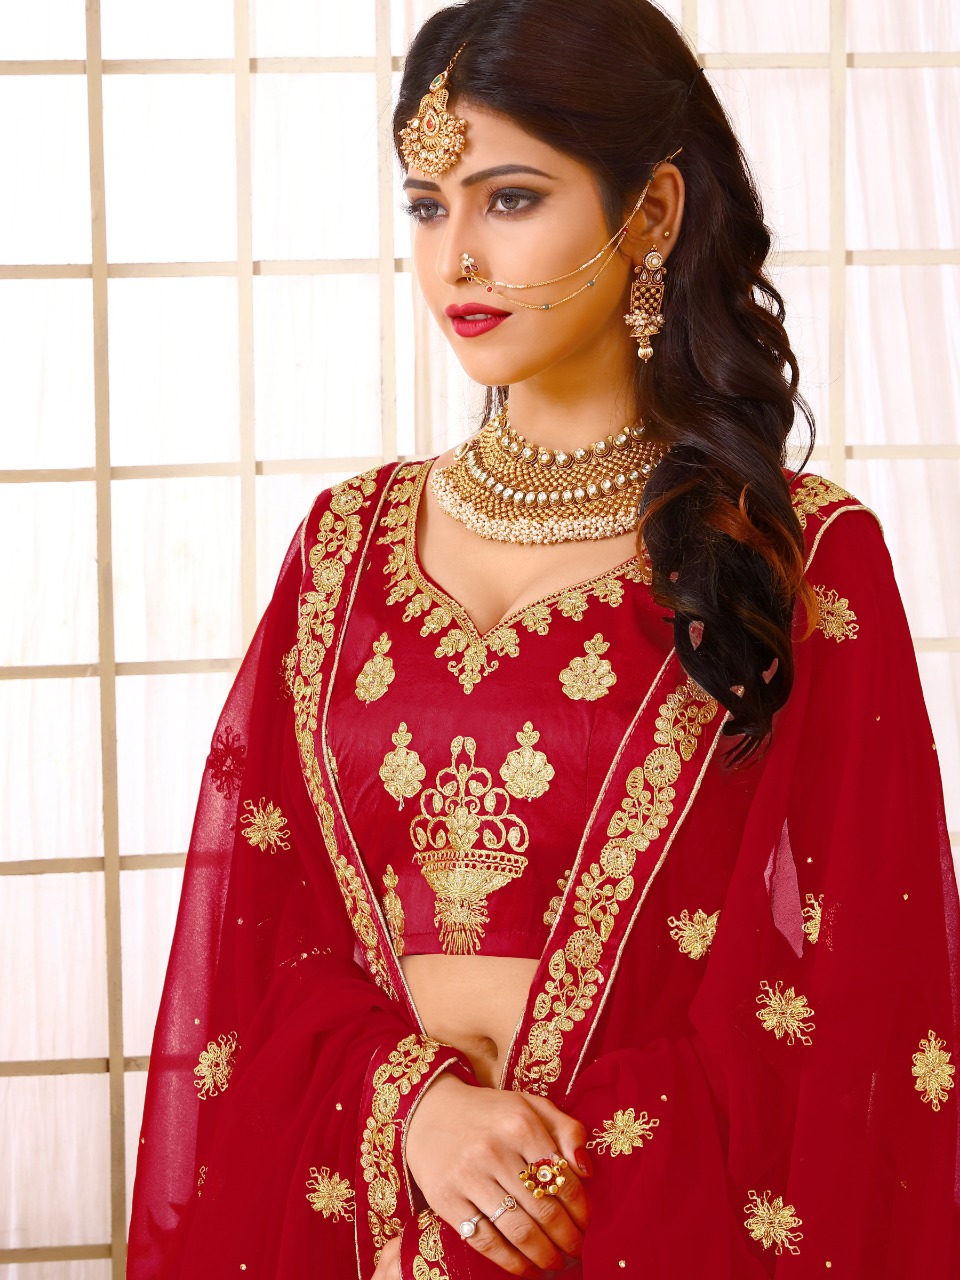 Sanskar sarees presents the wedding Vol 2 Traditional ethnic Wedding season  lehenga collection